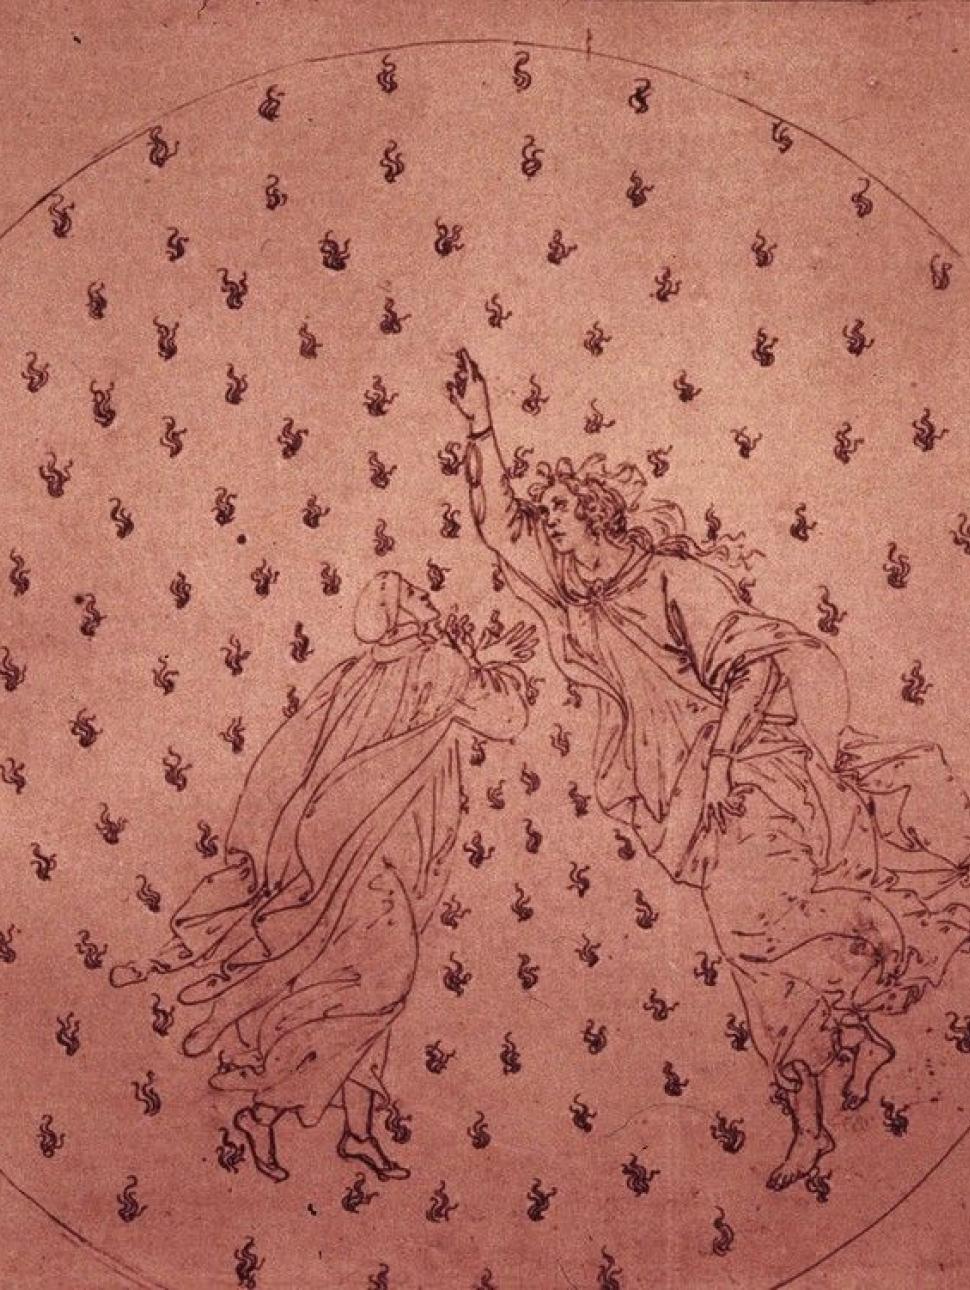 Illustration of Dante's Paradise by Botticelli 